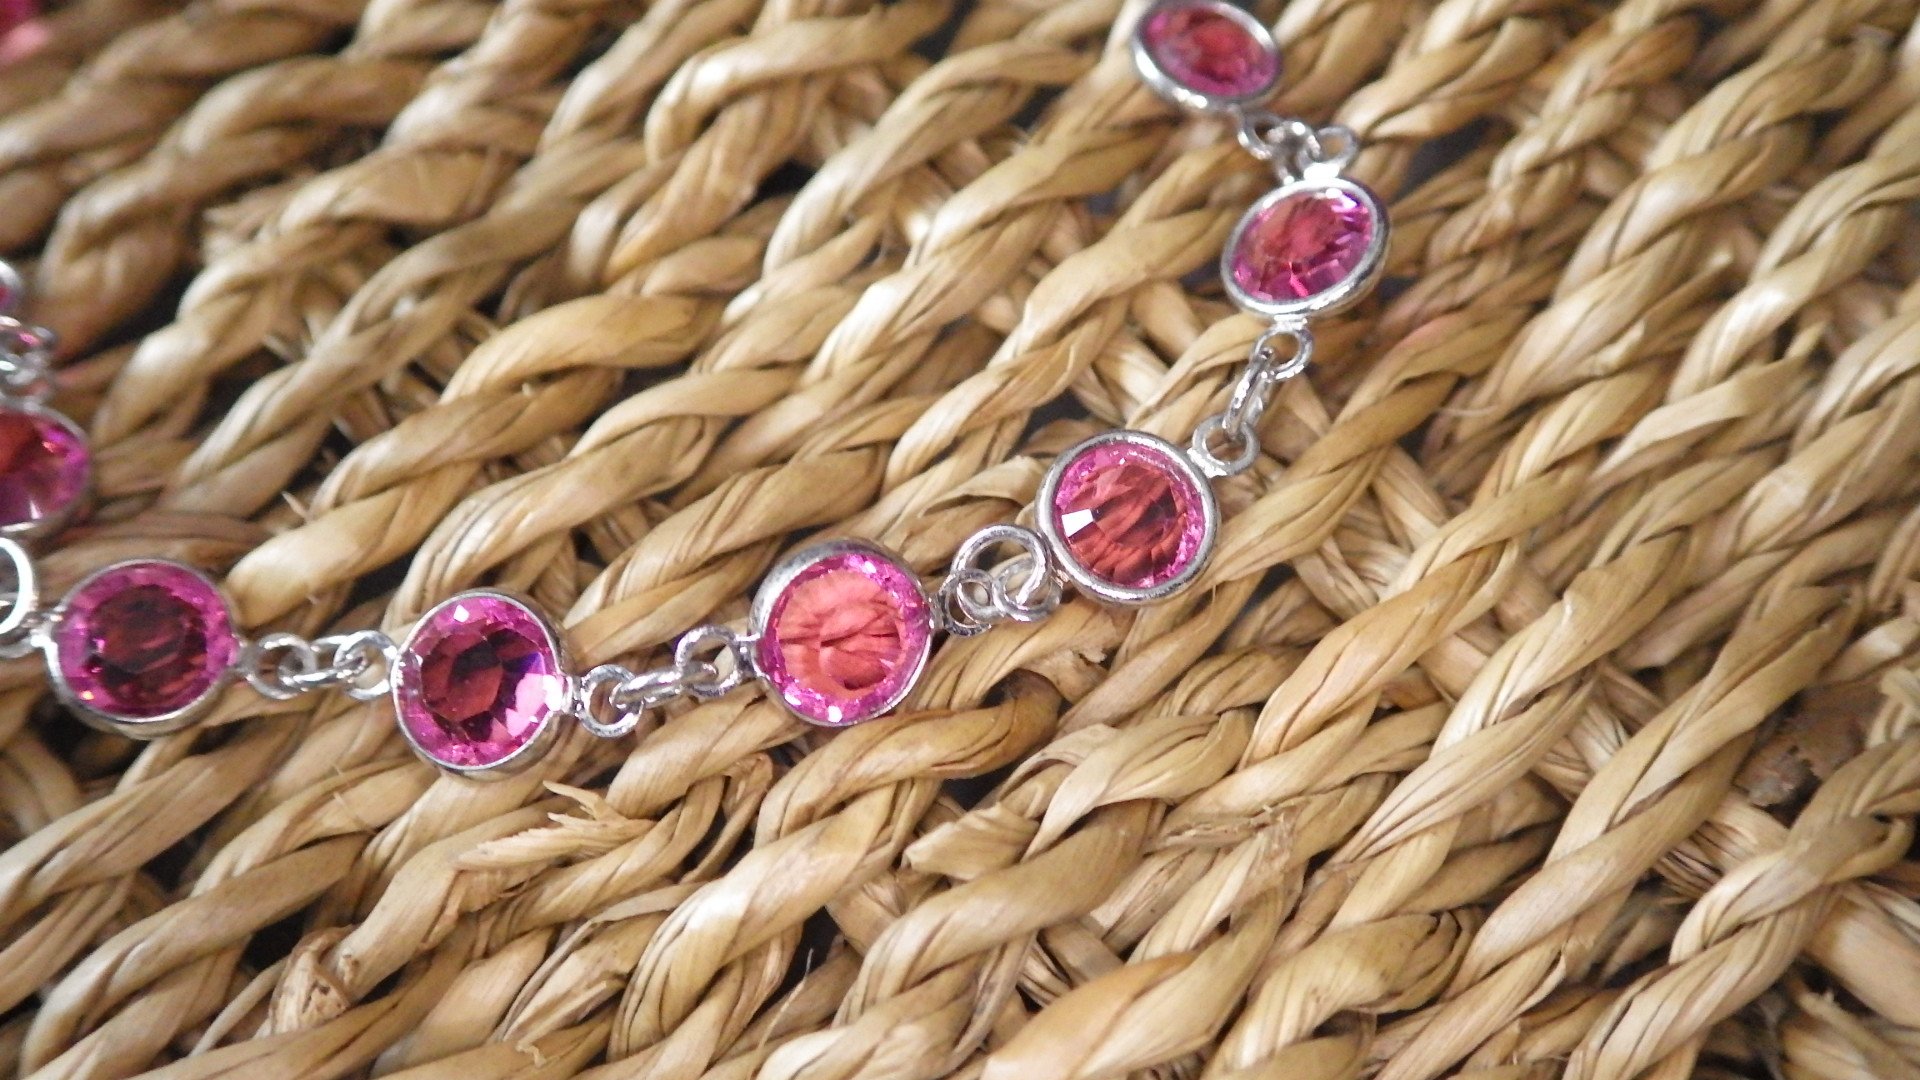  Pink Swarovski and silver chain  7.5-8.5”  $14.95 